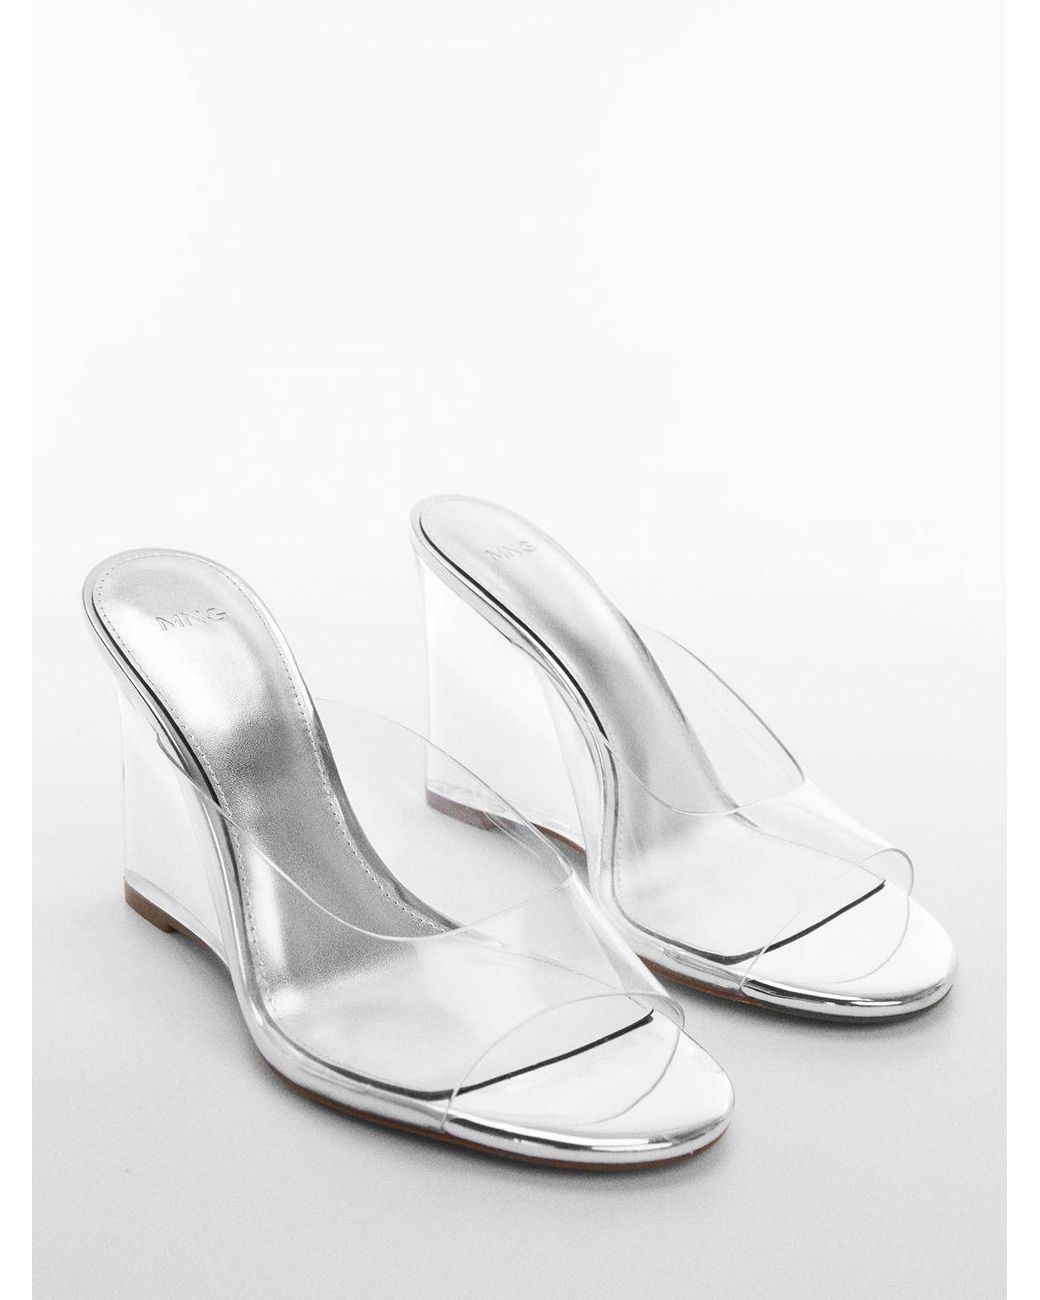 Mango Meli Transparent Vinyl Wedge Sandals in White | Lyst UK